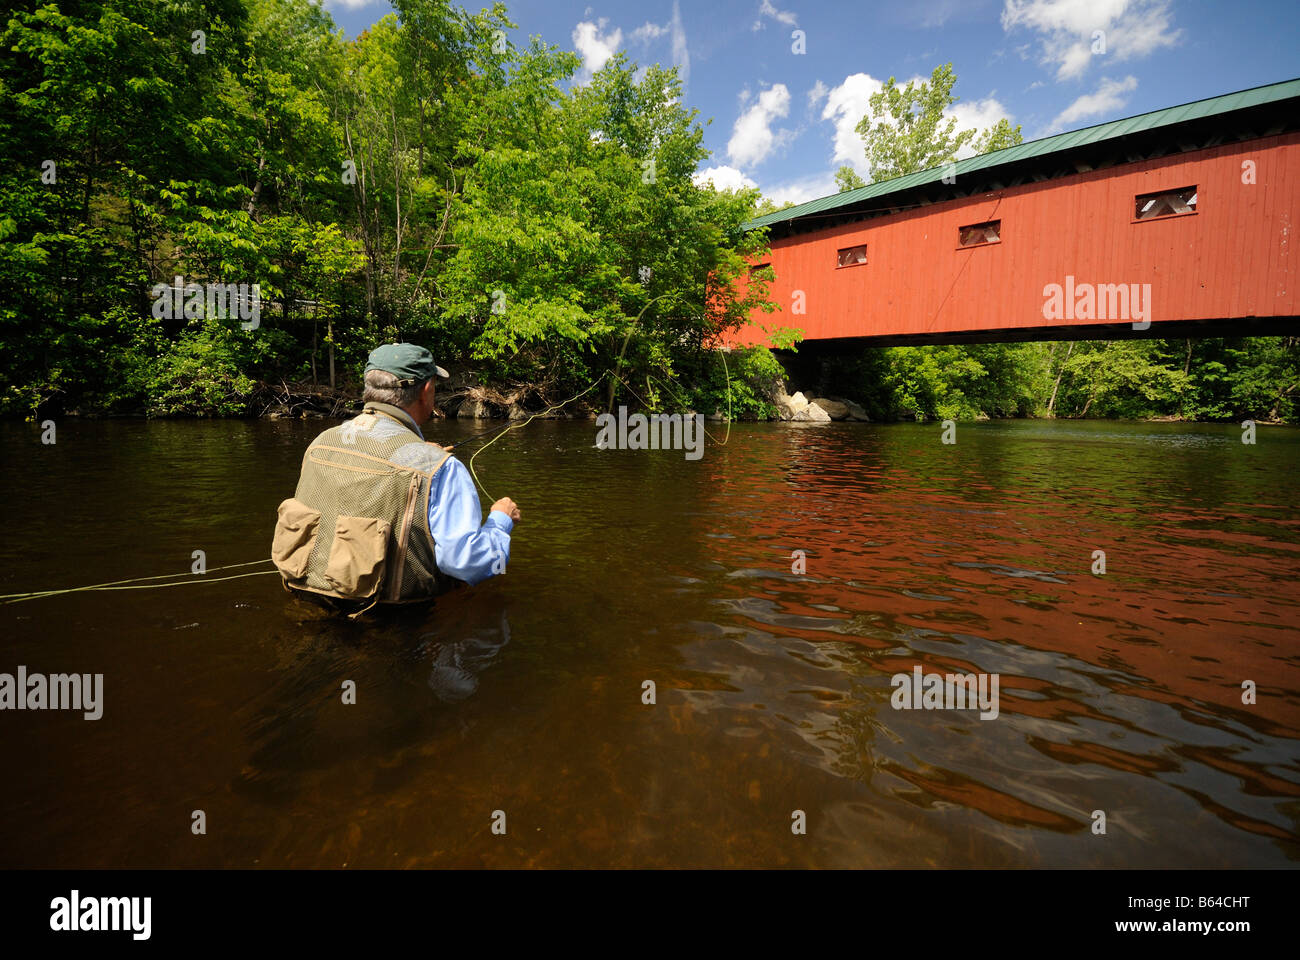 Flyfishing Battenkill River Red Covered Bridge Road Arlington Vermont Stock  Photo - Alamy